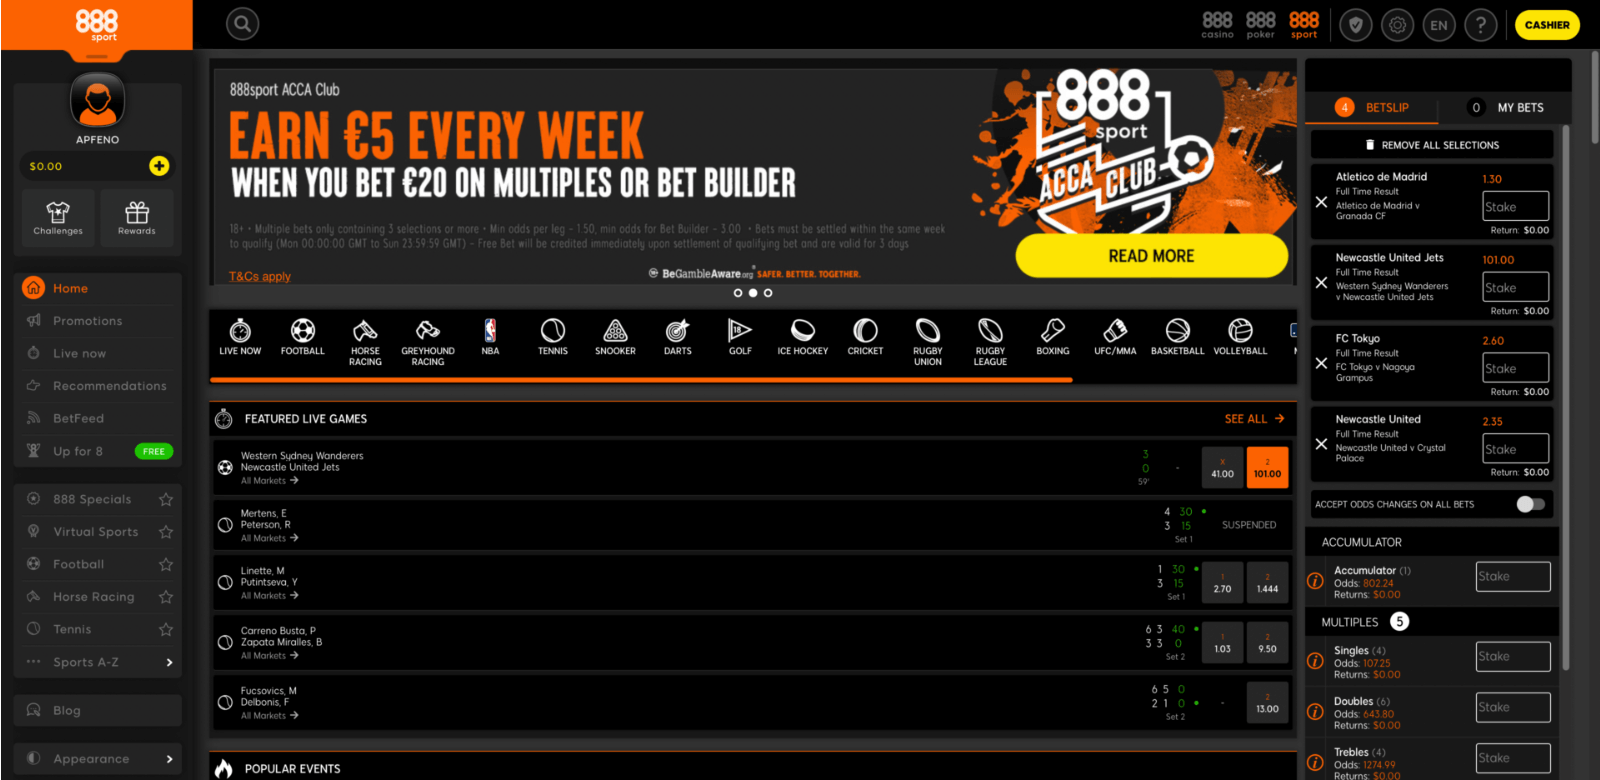 888sport betting company homepage